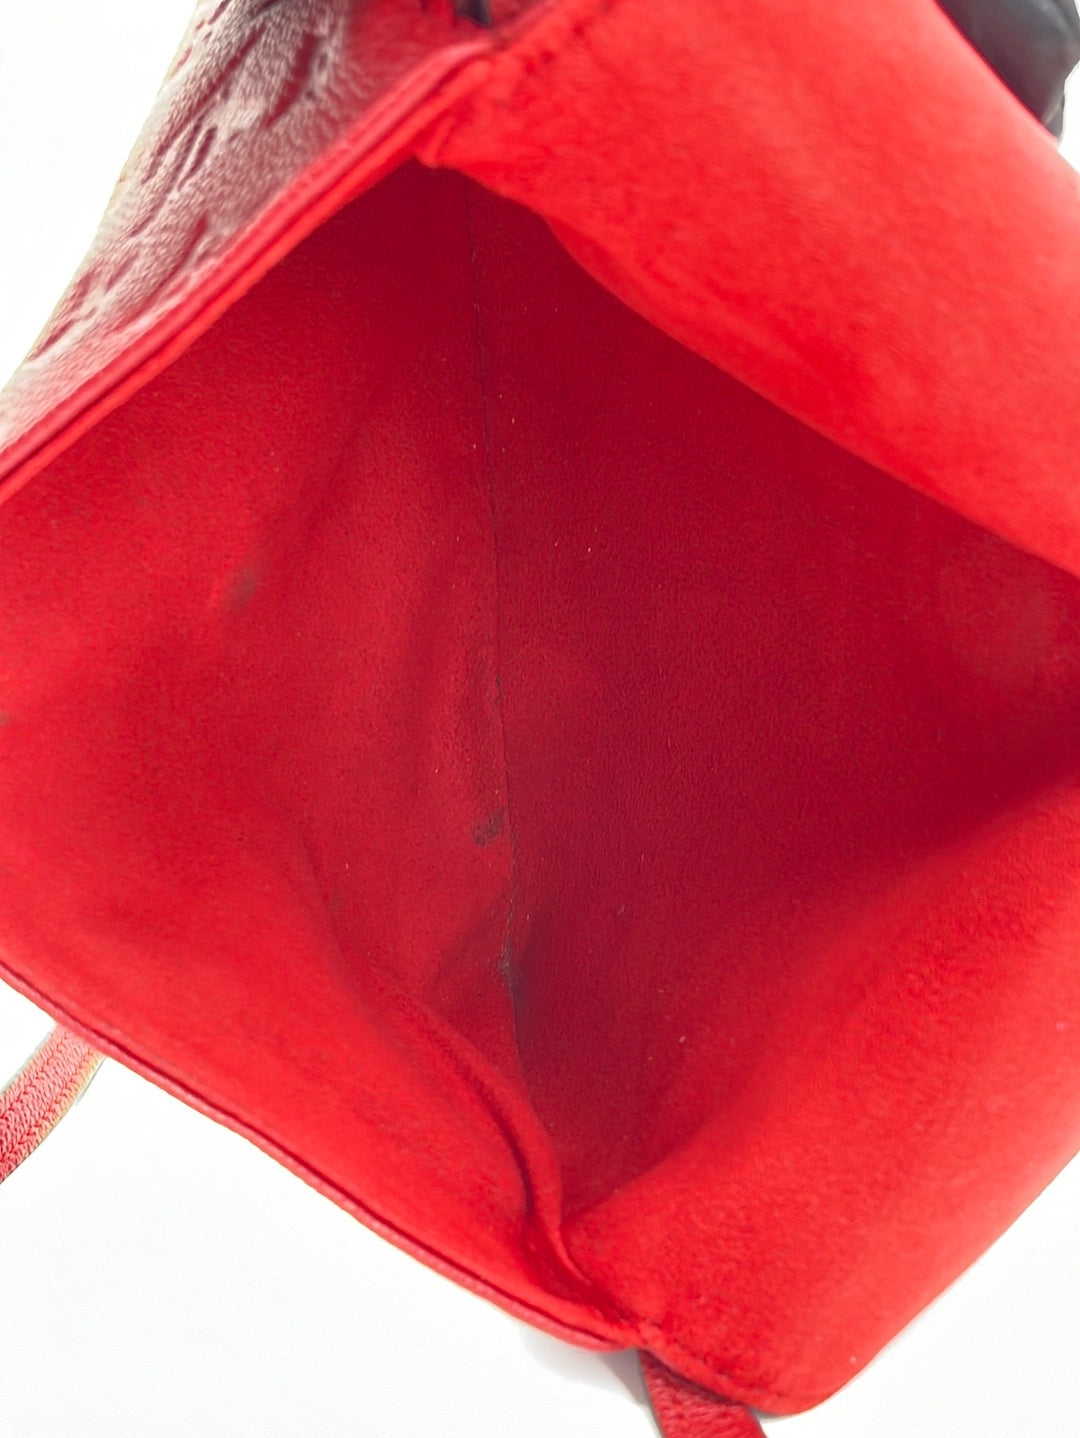 PRELOVED Louis Vuitton Monogram Red Empreinte Twice Crossbody Bag RX8HVB7 040324 P